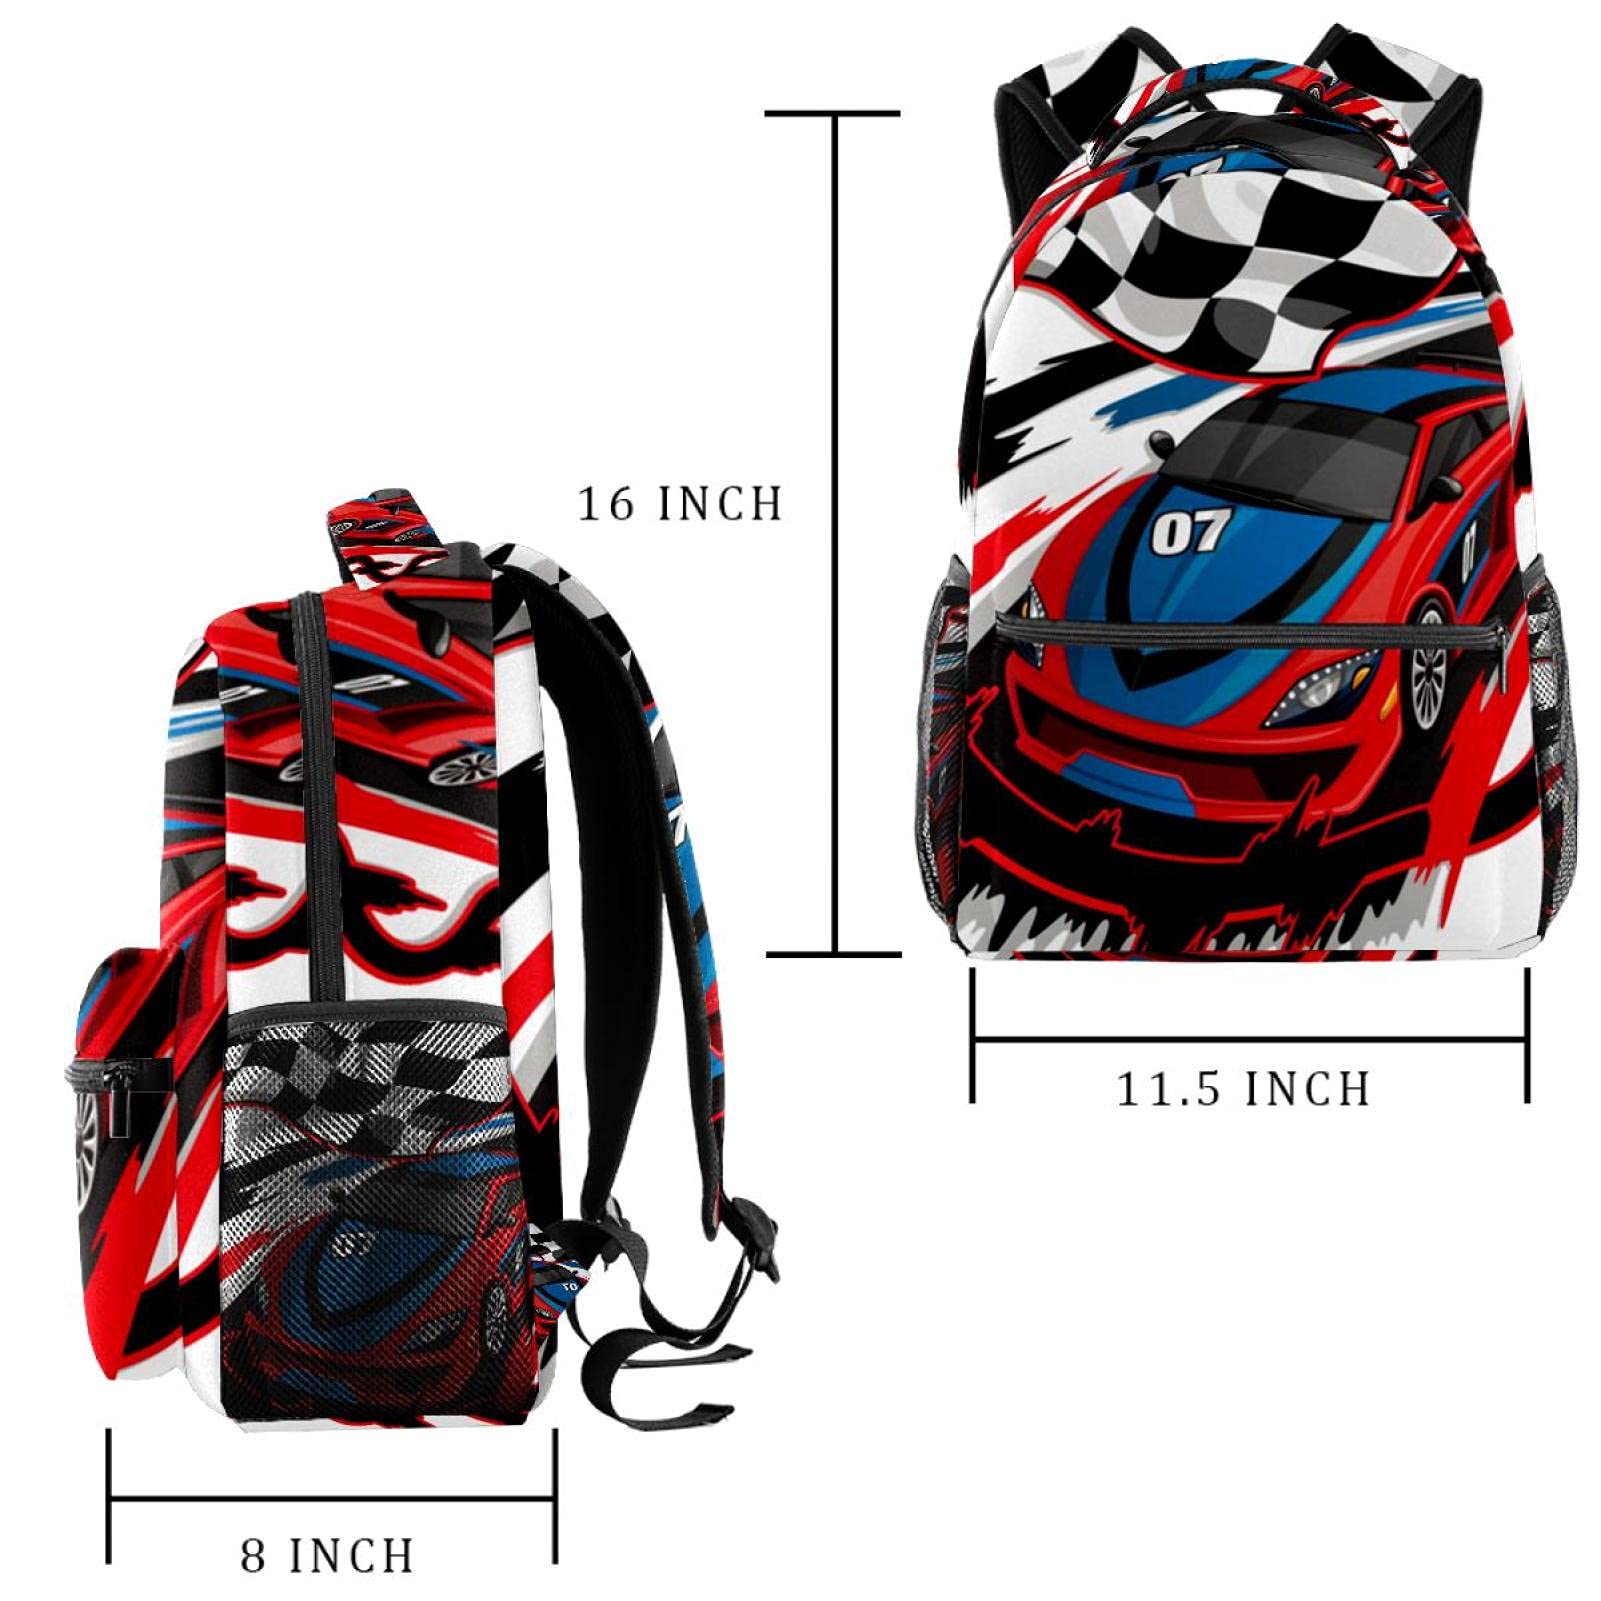 JAVENPROEQT Speeding Racing Car With Checkered Flag Race Track Casual School Backpack For Teen Girls Boys, Shoulder Bag For Men Women